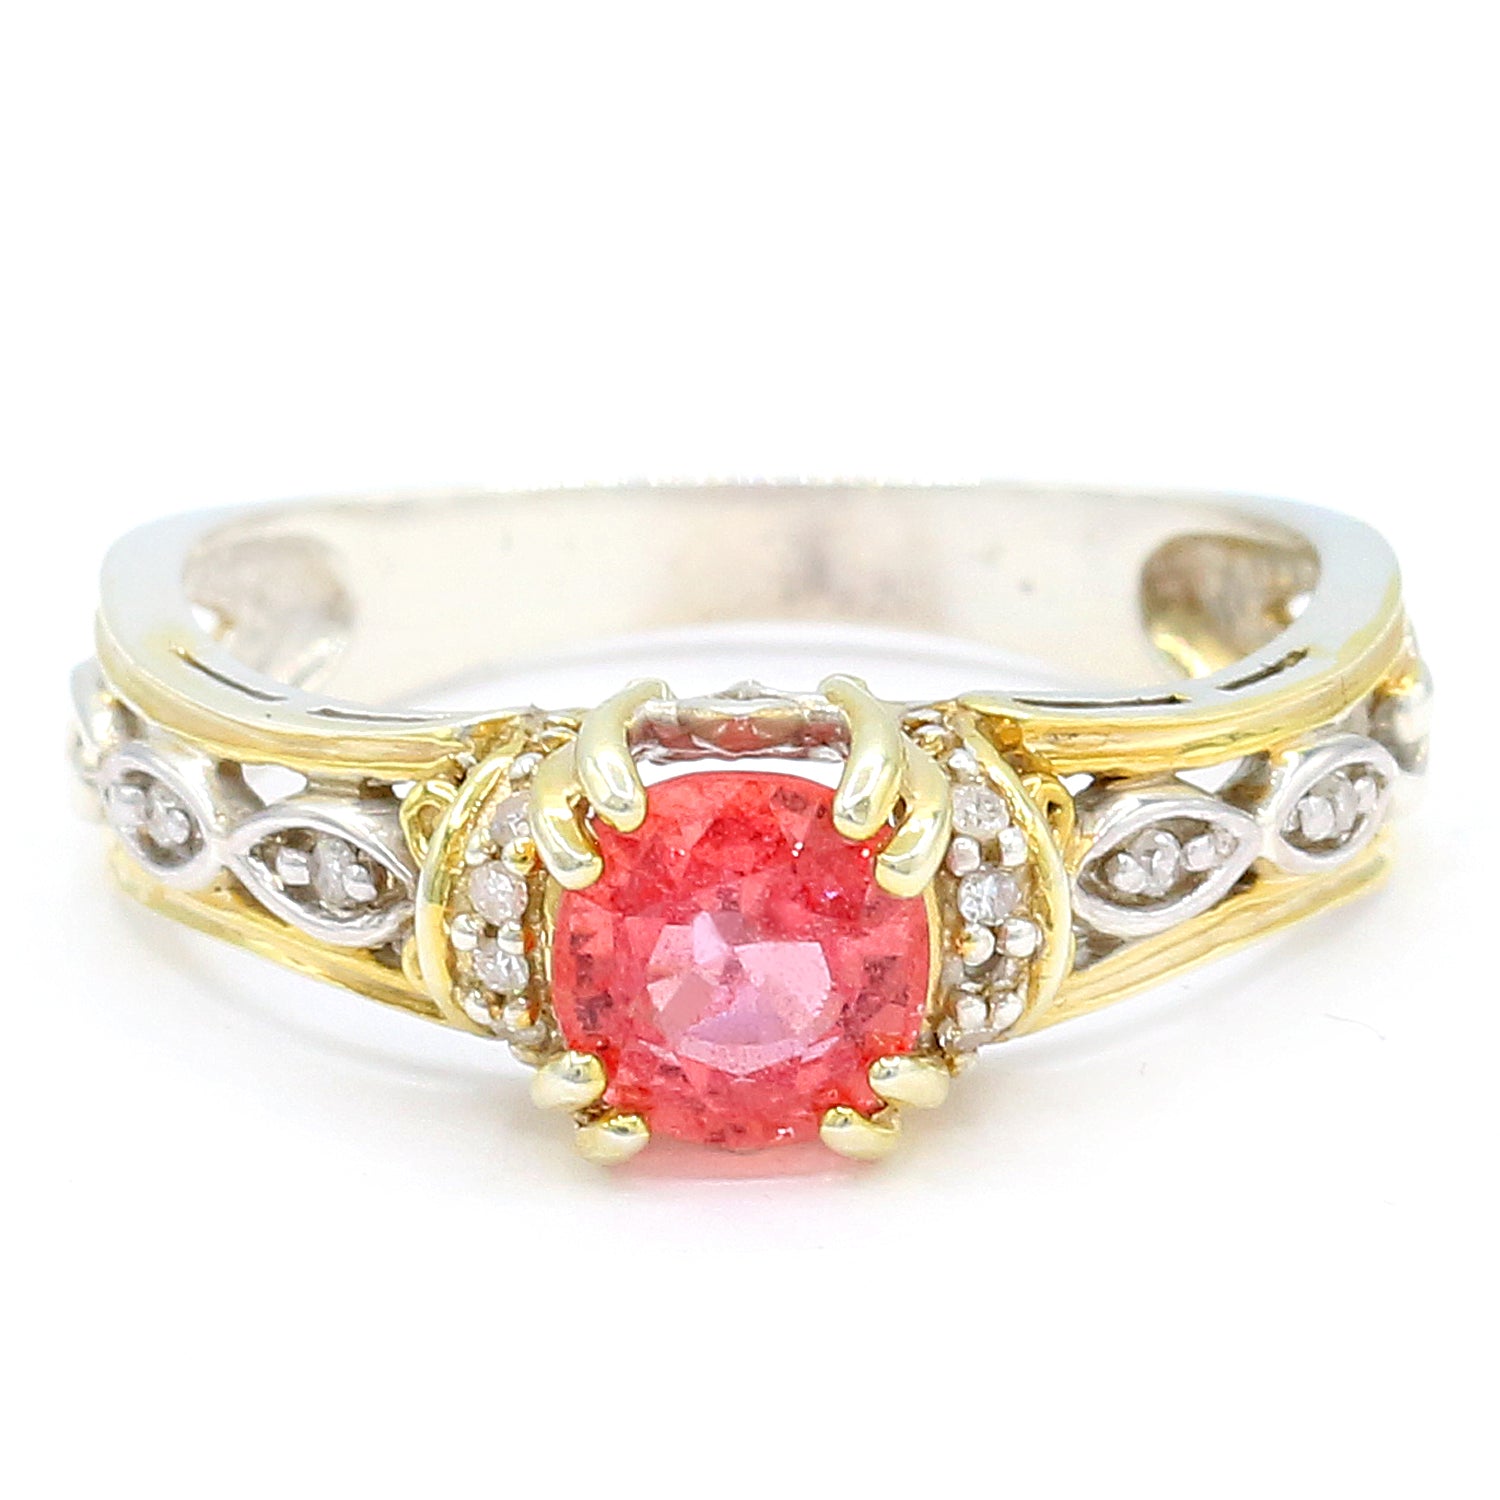 Michael's Original One-of-a-Kind 1.18ctw Padparadscha Sapphire & Diamond Ring